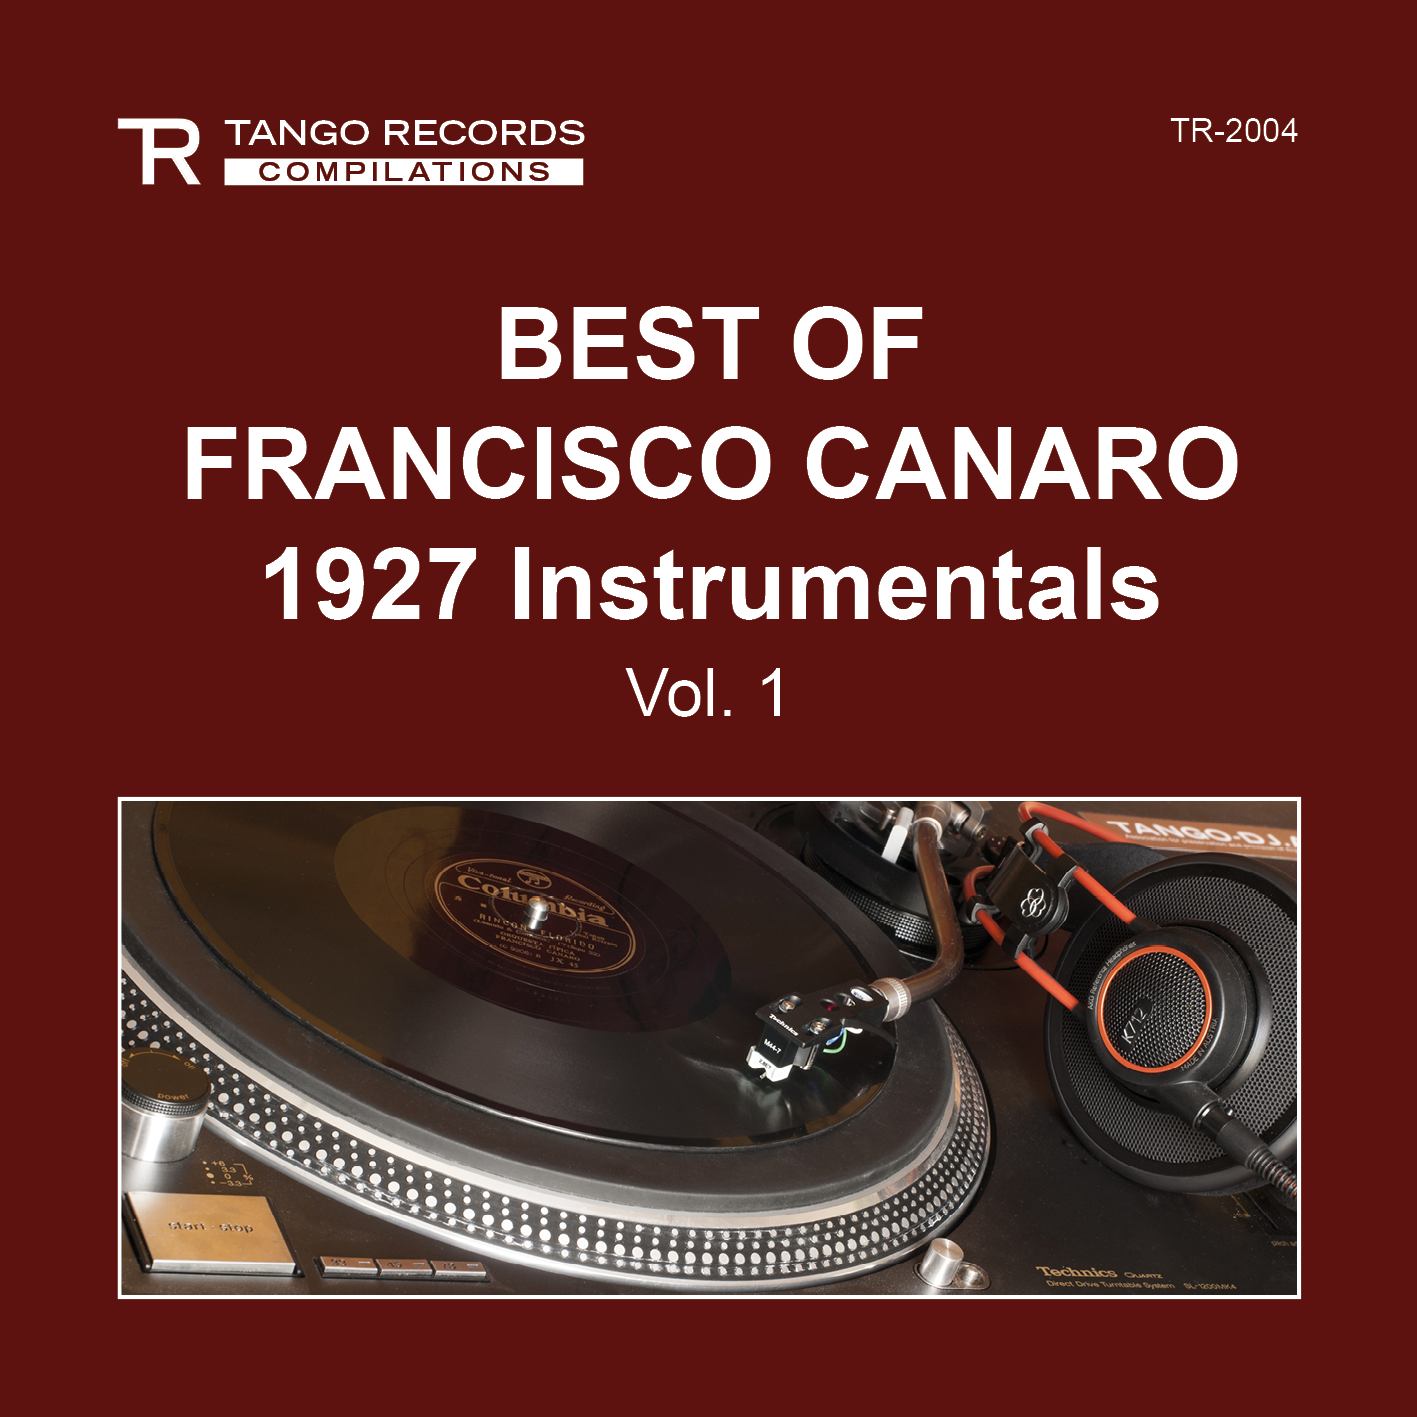 Best of Francisco Canaro 1927 Instrumentals Vol. 1